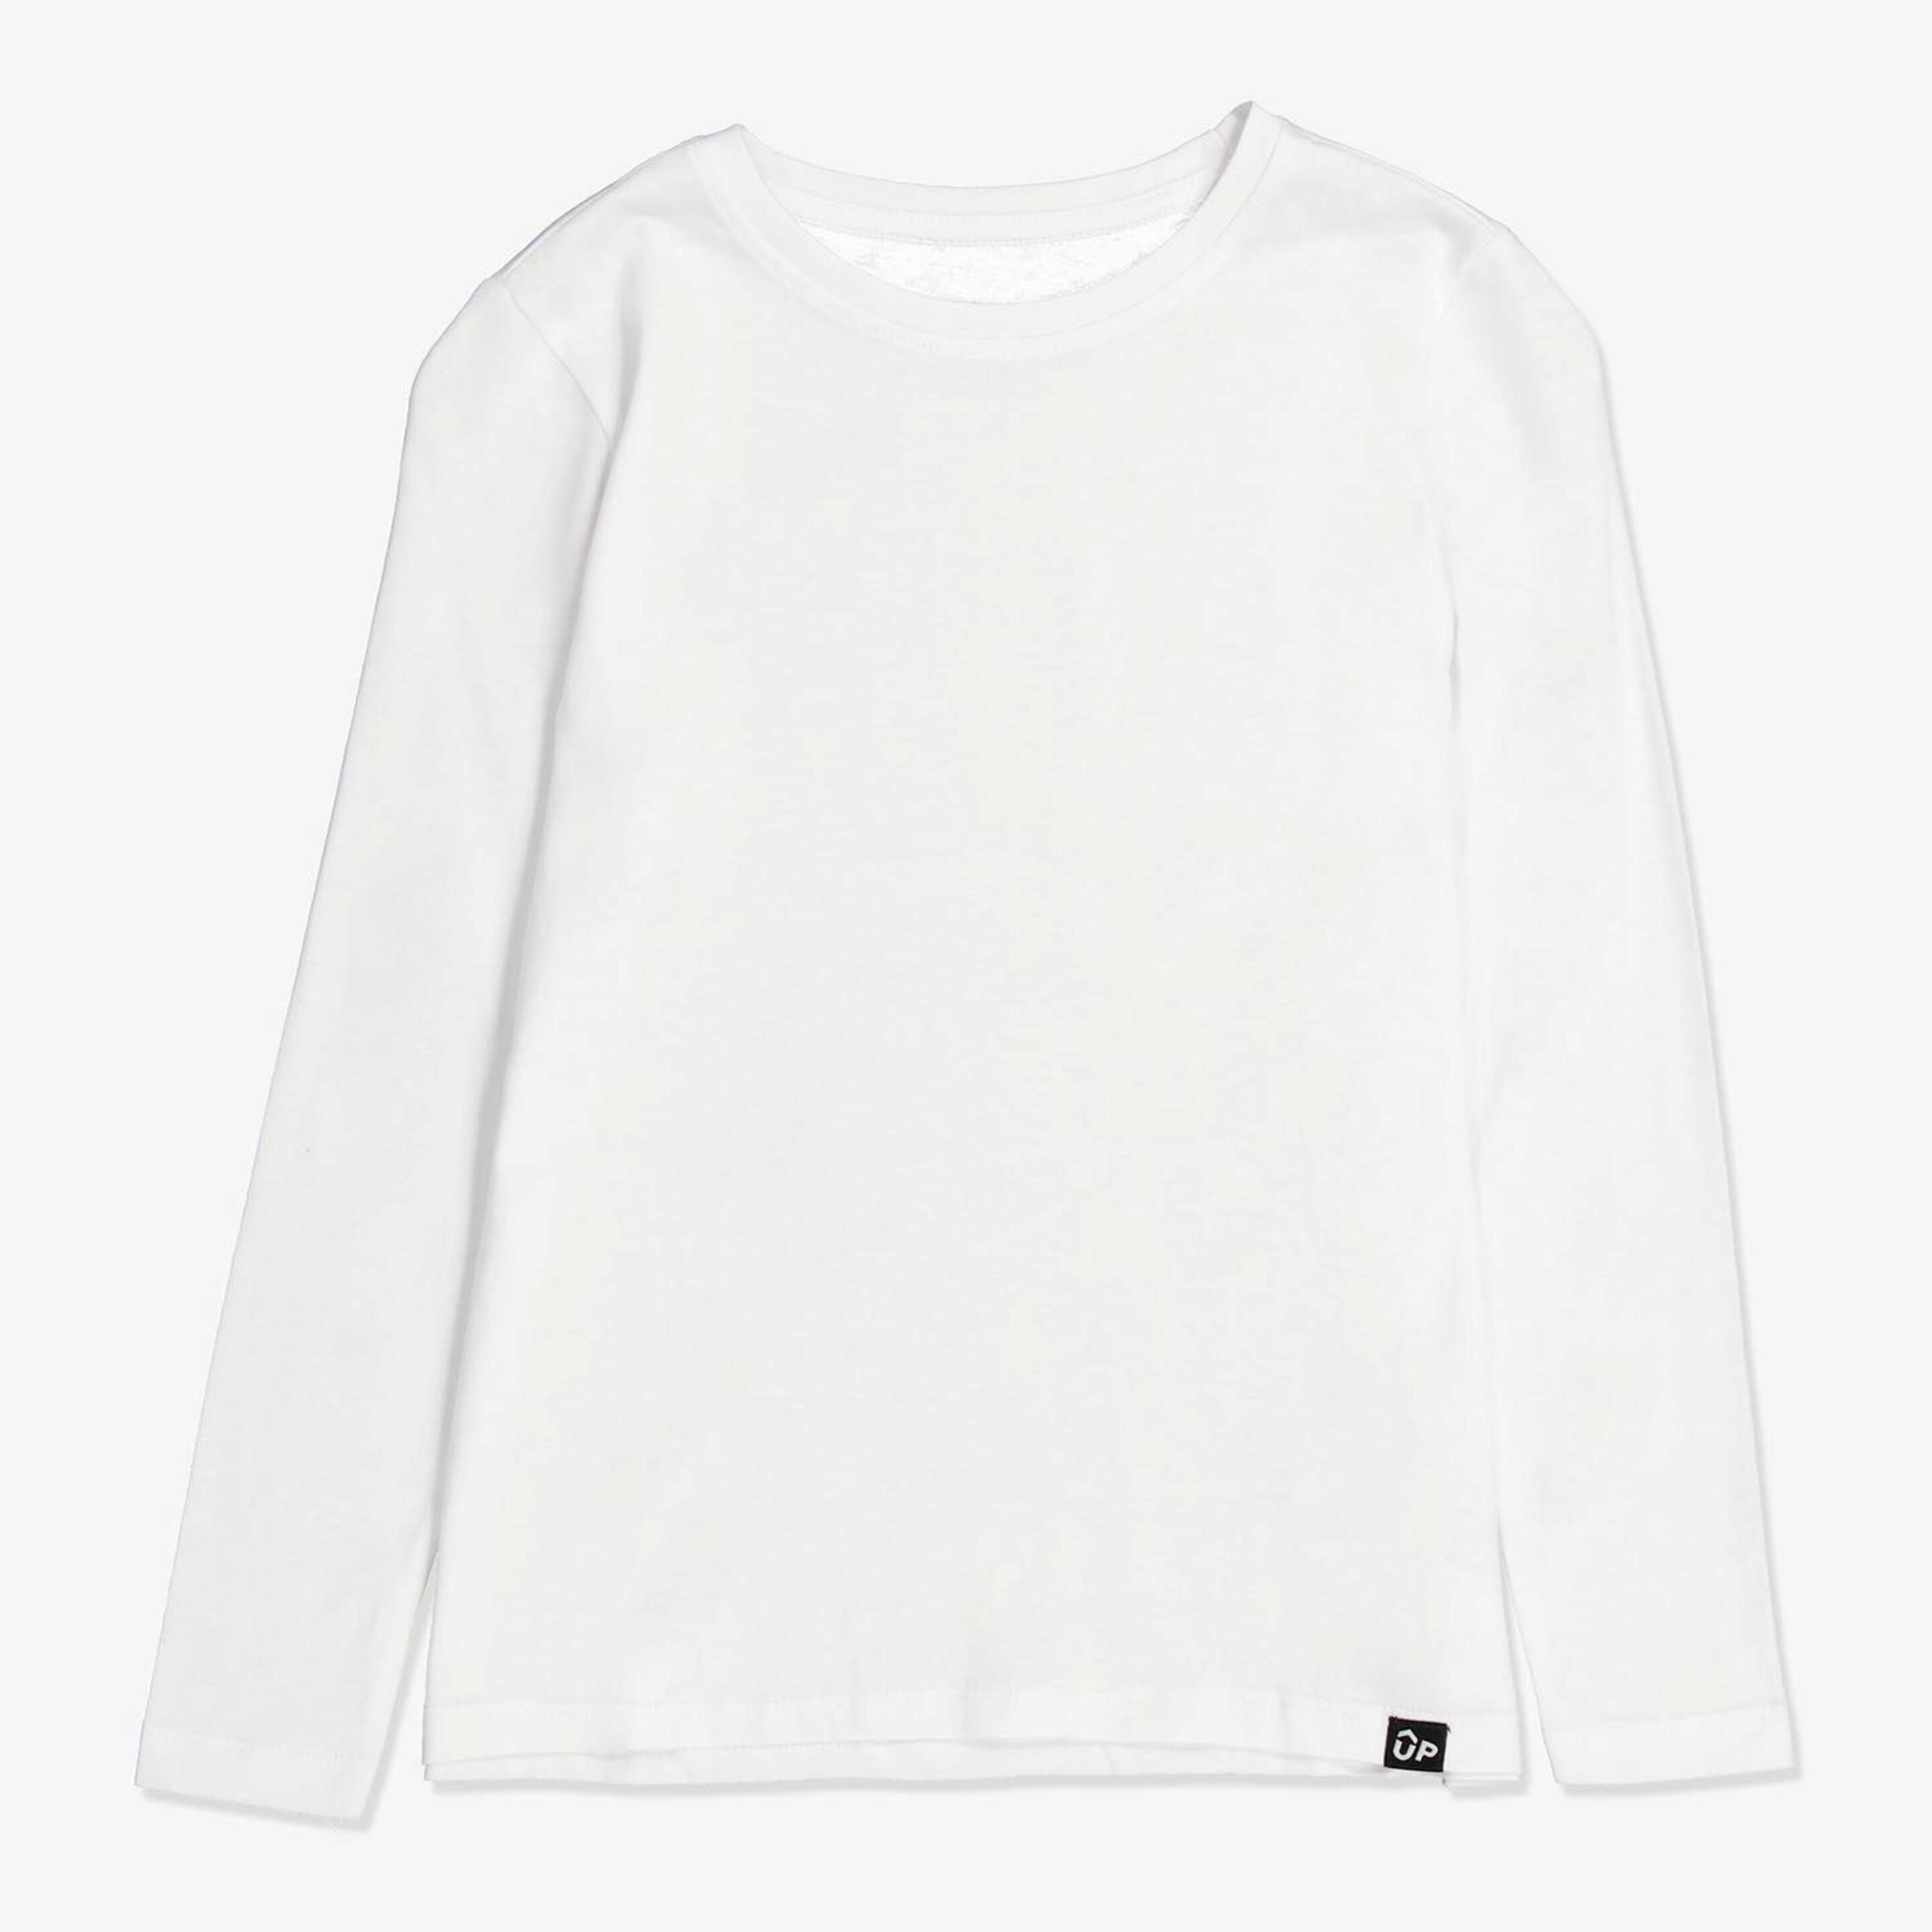 Up Basic - blanco - Camiseta Manga Larga Niña